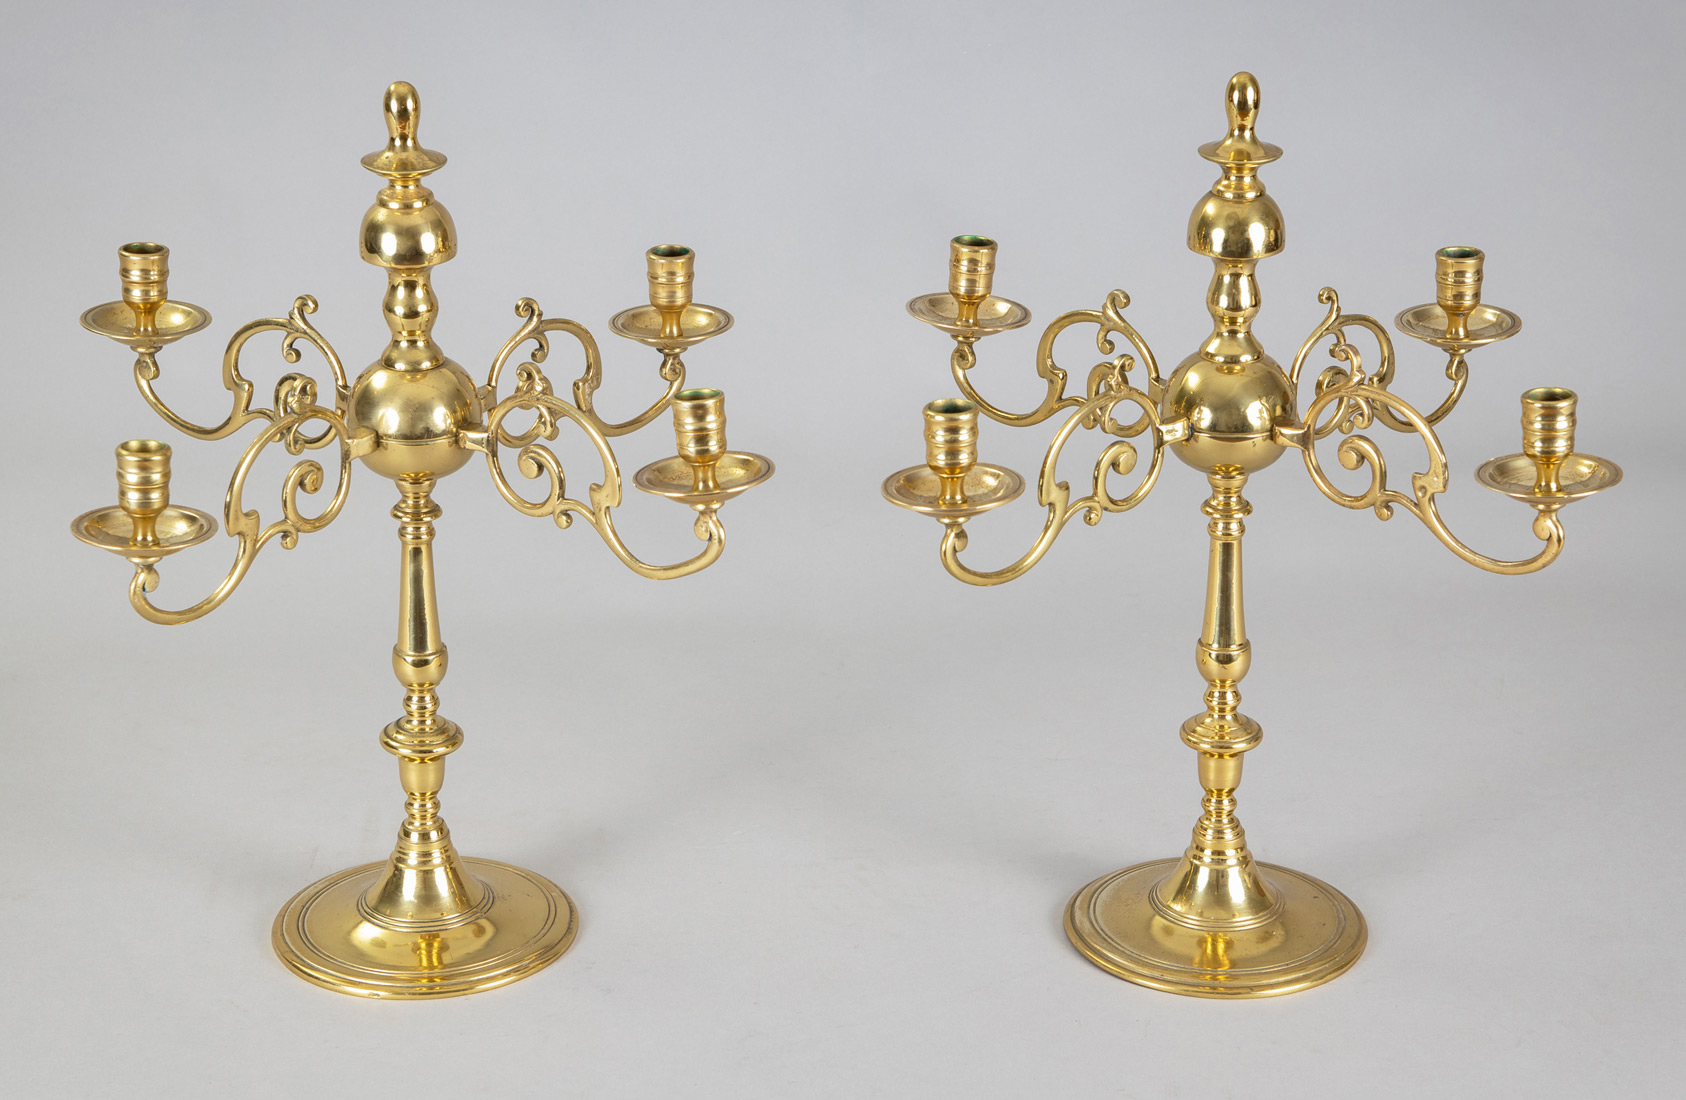 https://susansilverantiques.com/wp-content/uploads/antique-pair-english-brass-candelabra-angle-front-susan-silver-antiques-7898.jpg